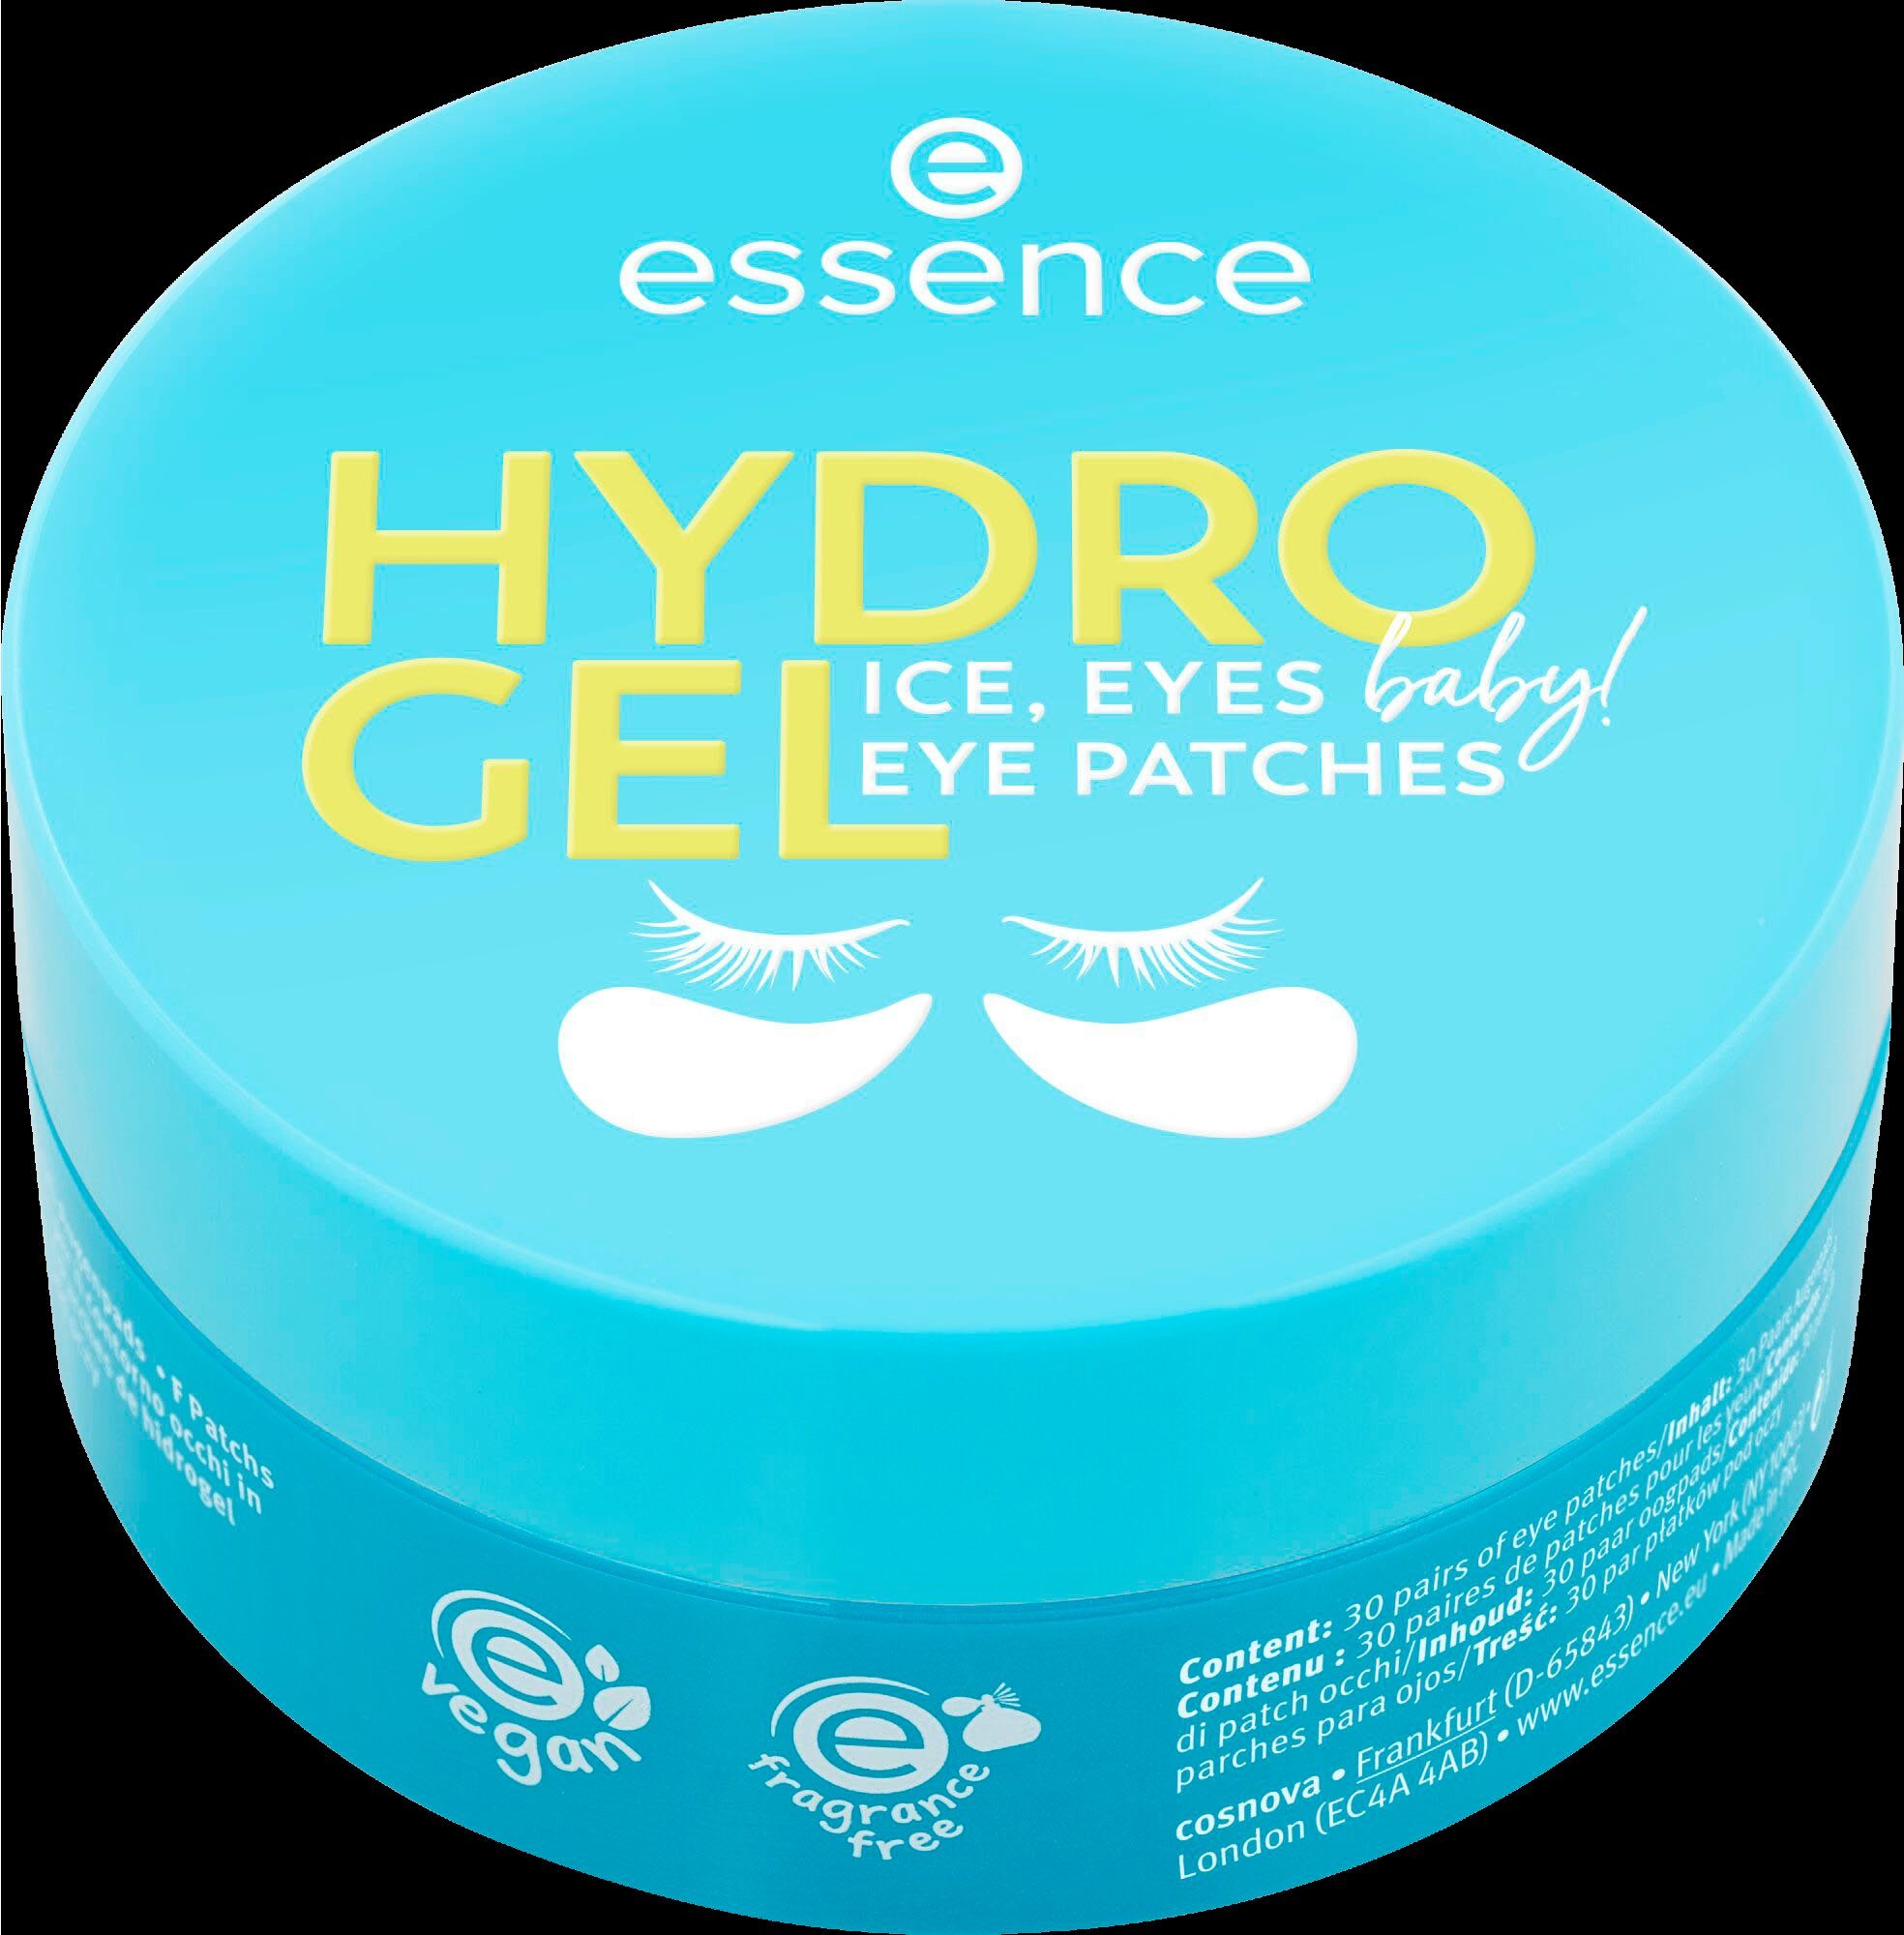 Essence HYDRO patches eye EYES, baby! Pairs, Augenpflege-Set 30 ICE, 3 GEL